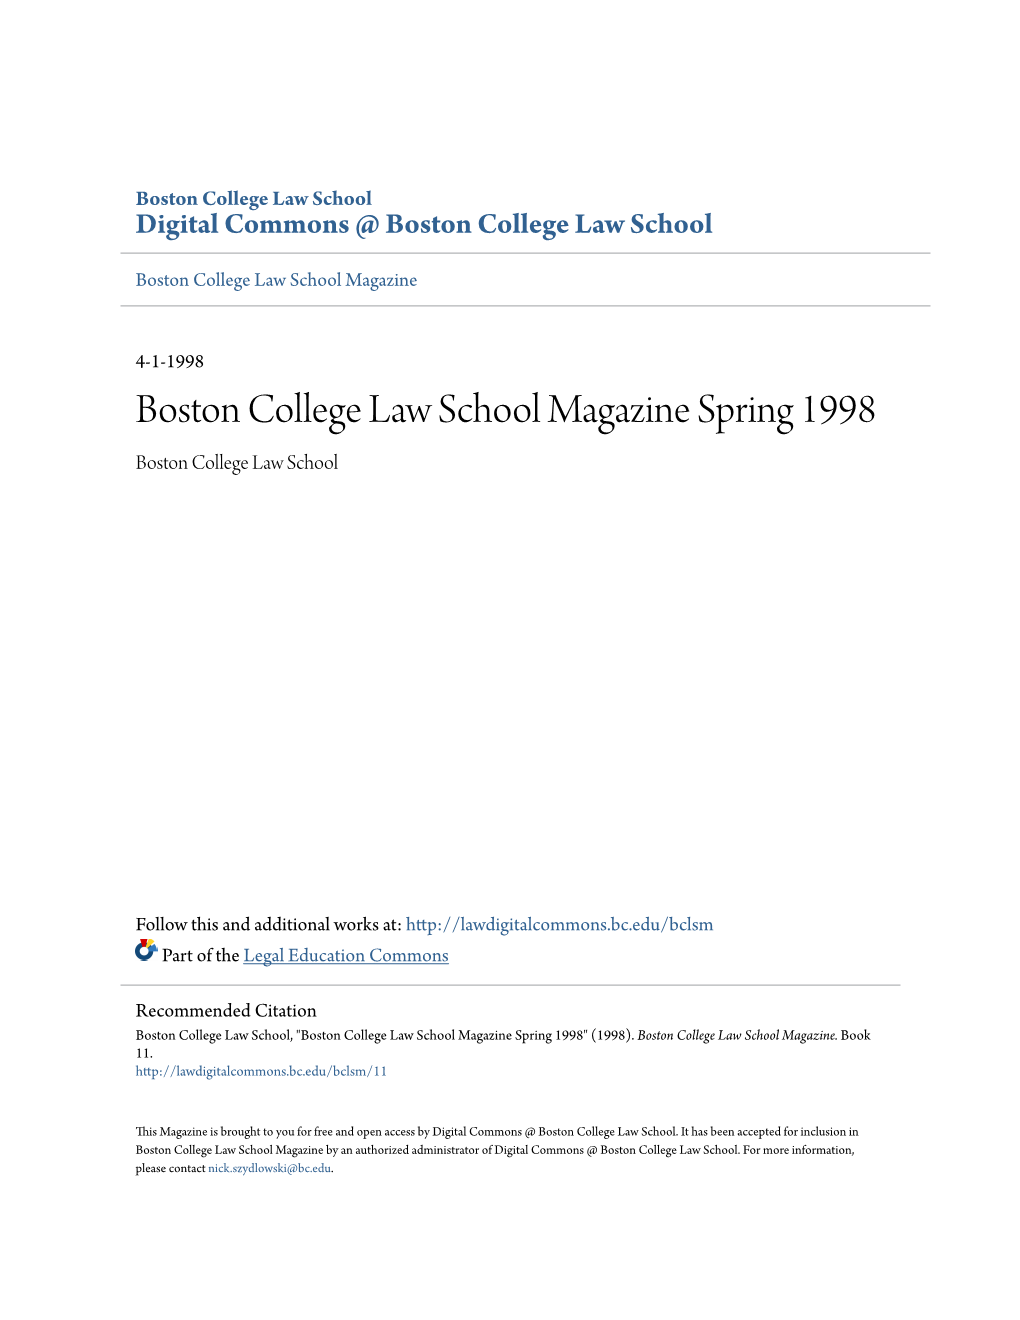 Boston College Law School Magazine Spring 1998 Boston College Law School